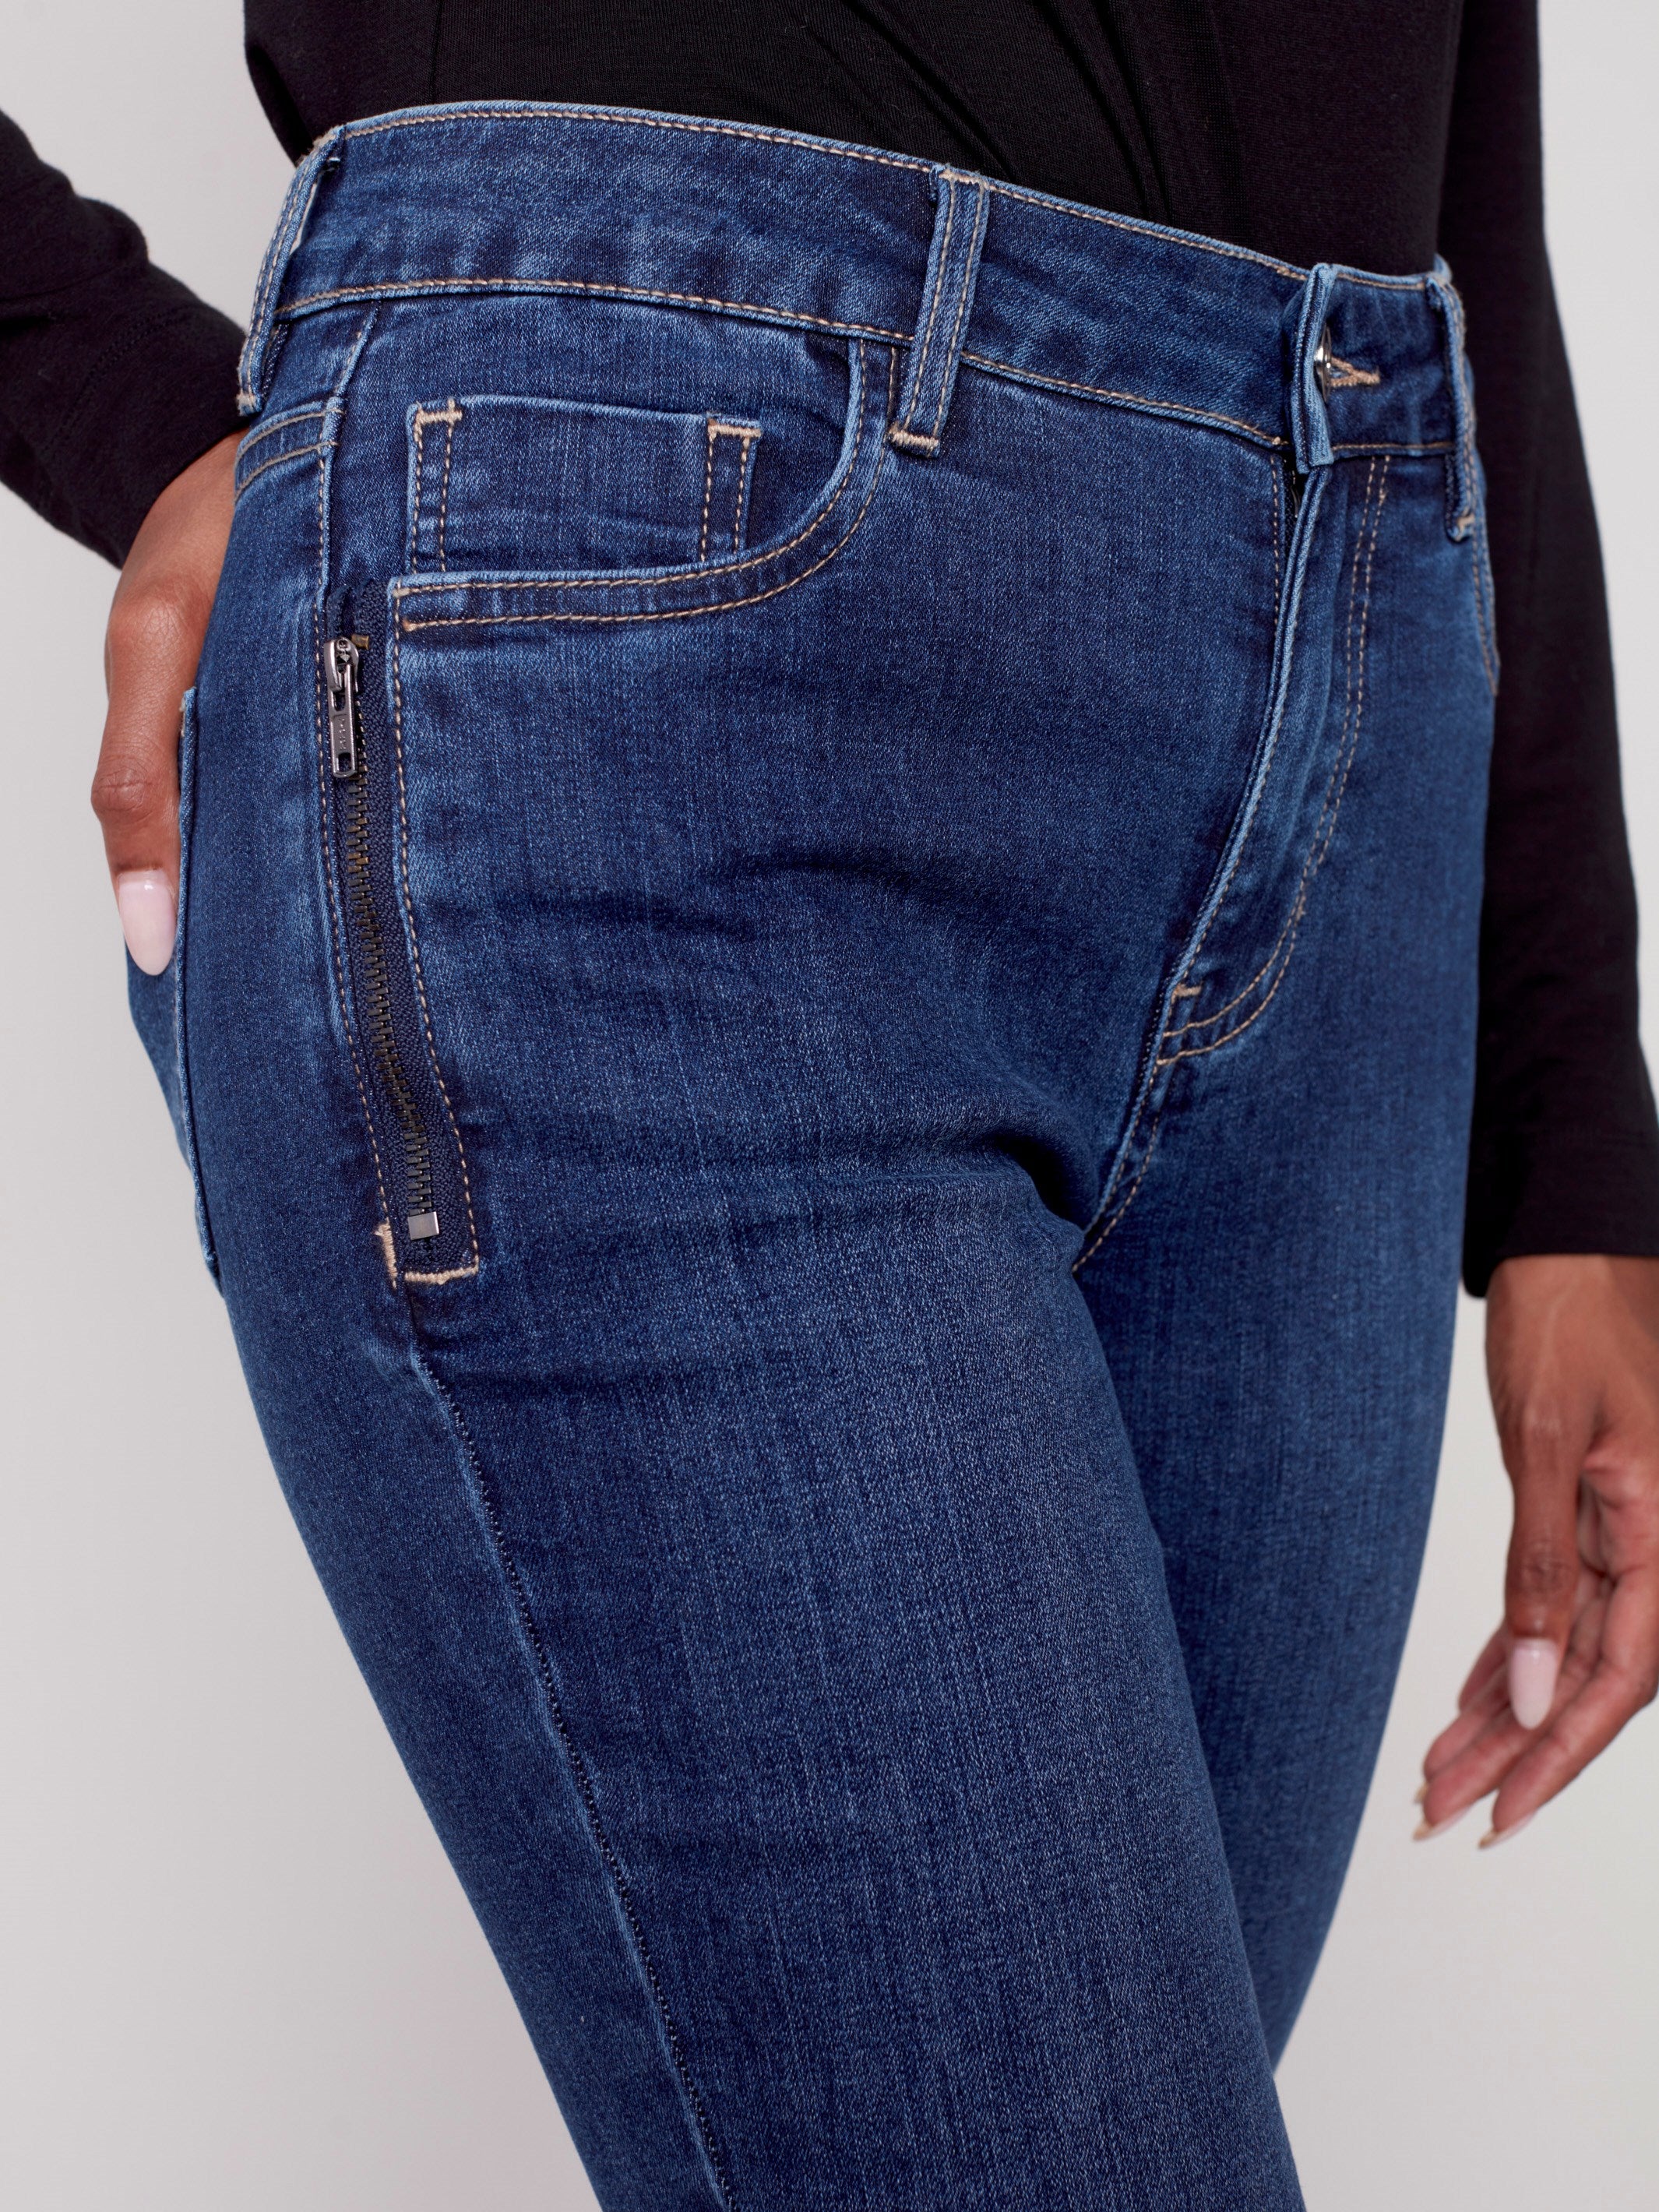 Jeans with Zipper Pocket Detail - Indigo